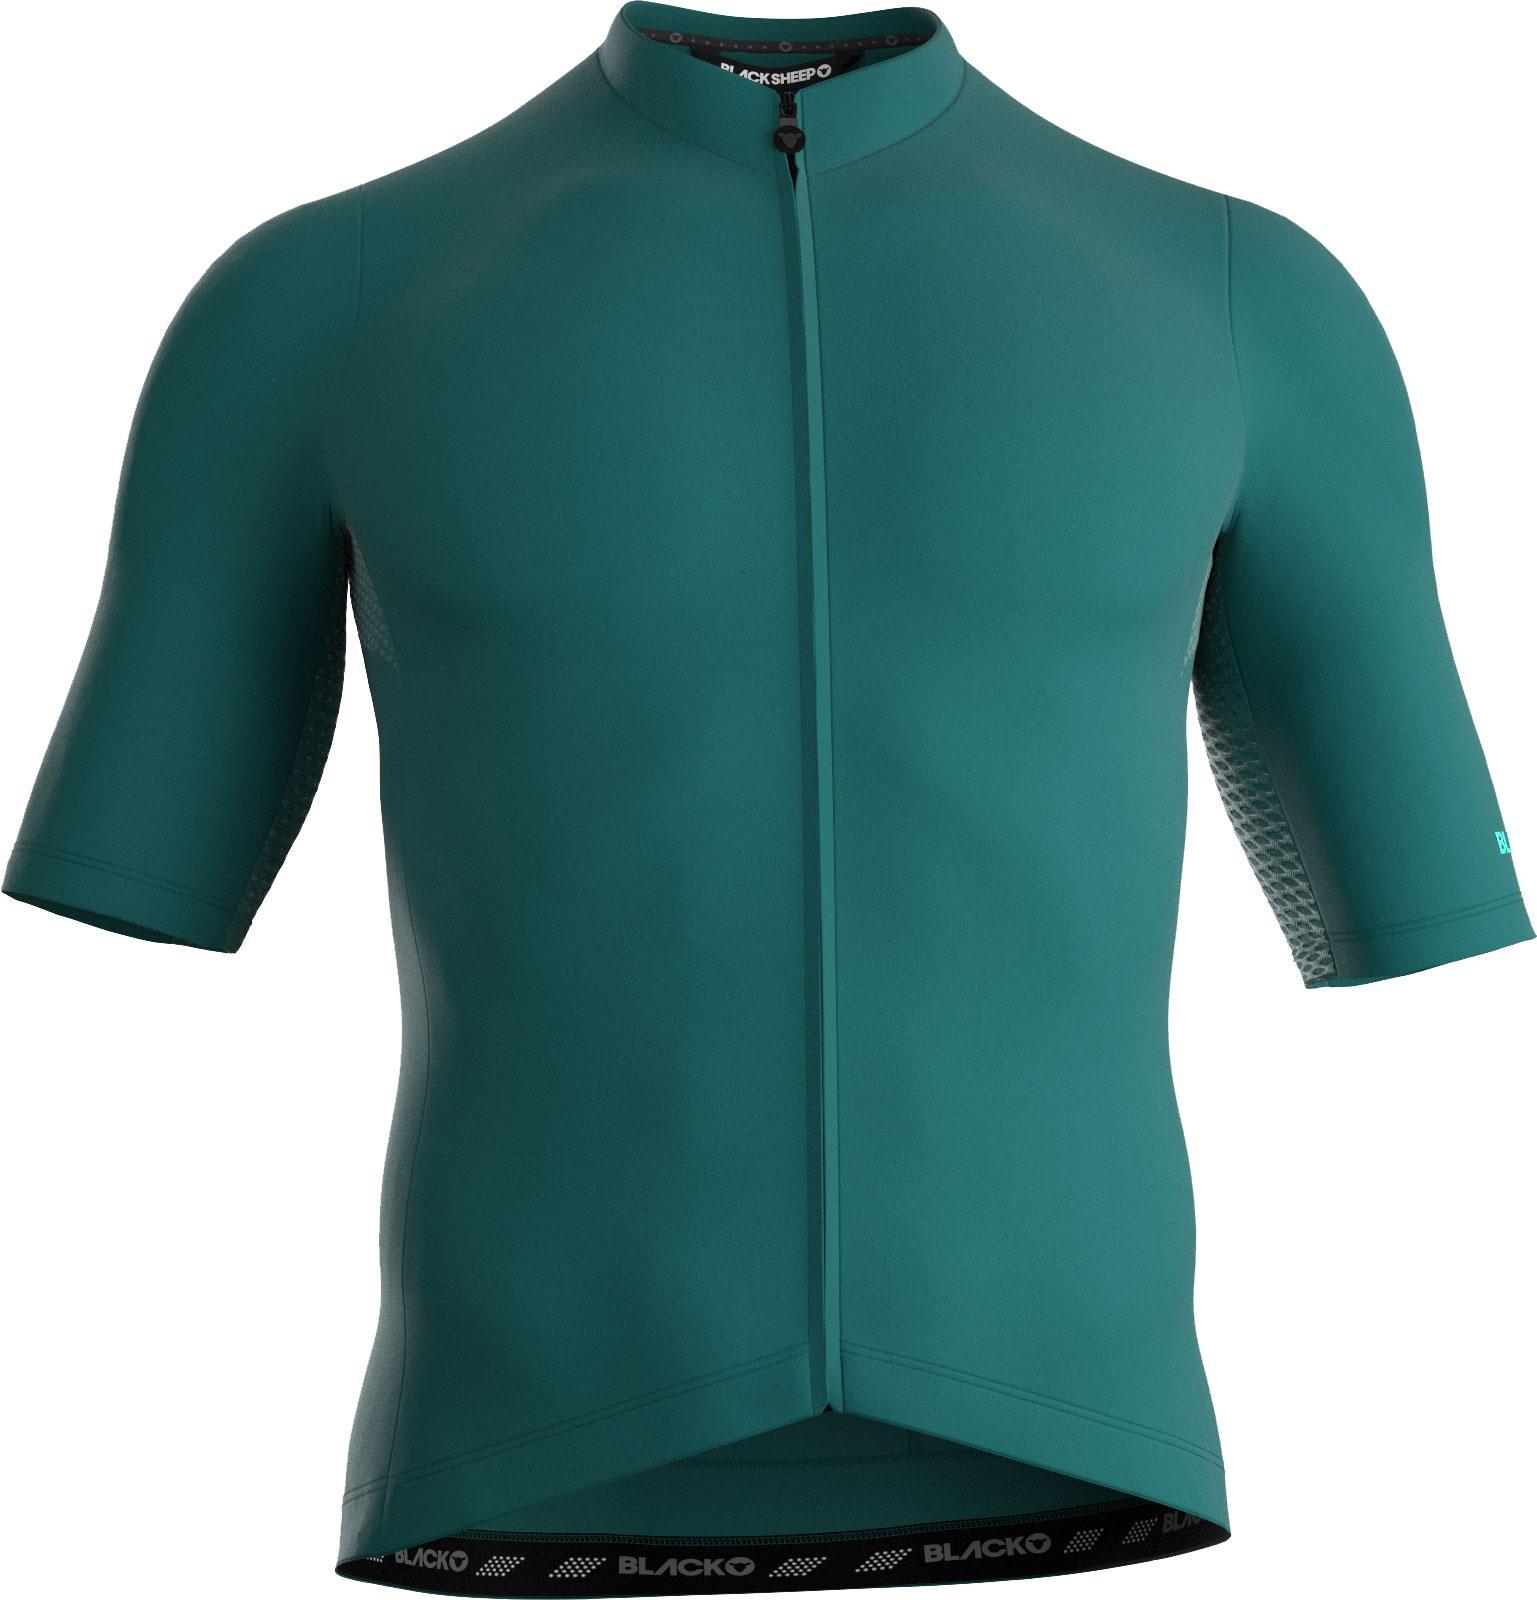 Black Sheep Cycling Essential Team Short Sleeve Jersey - Green